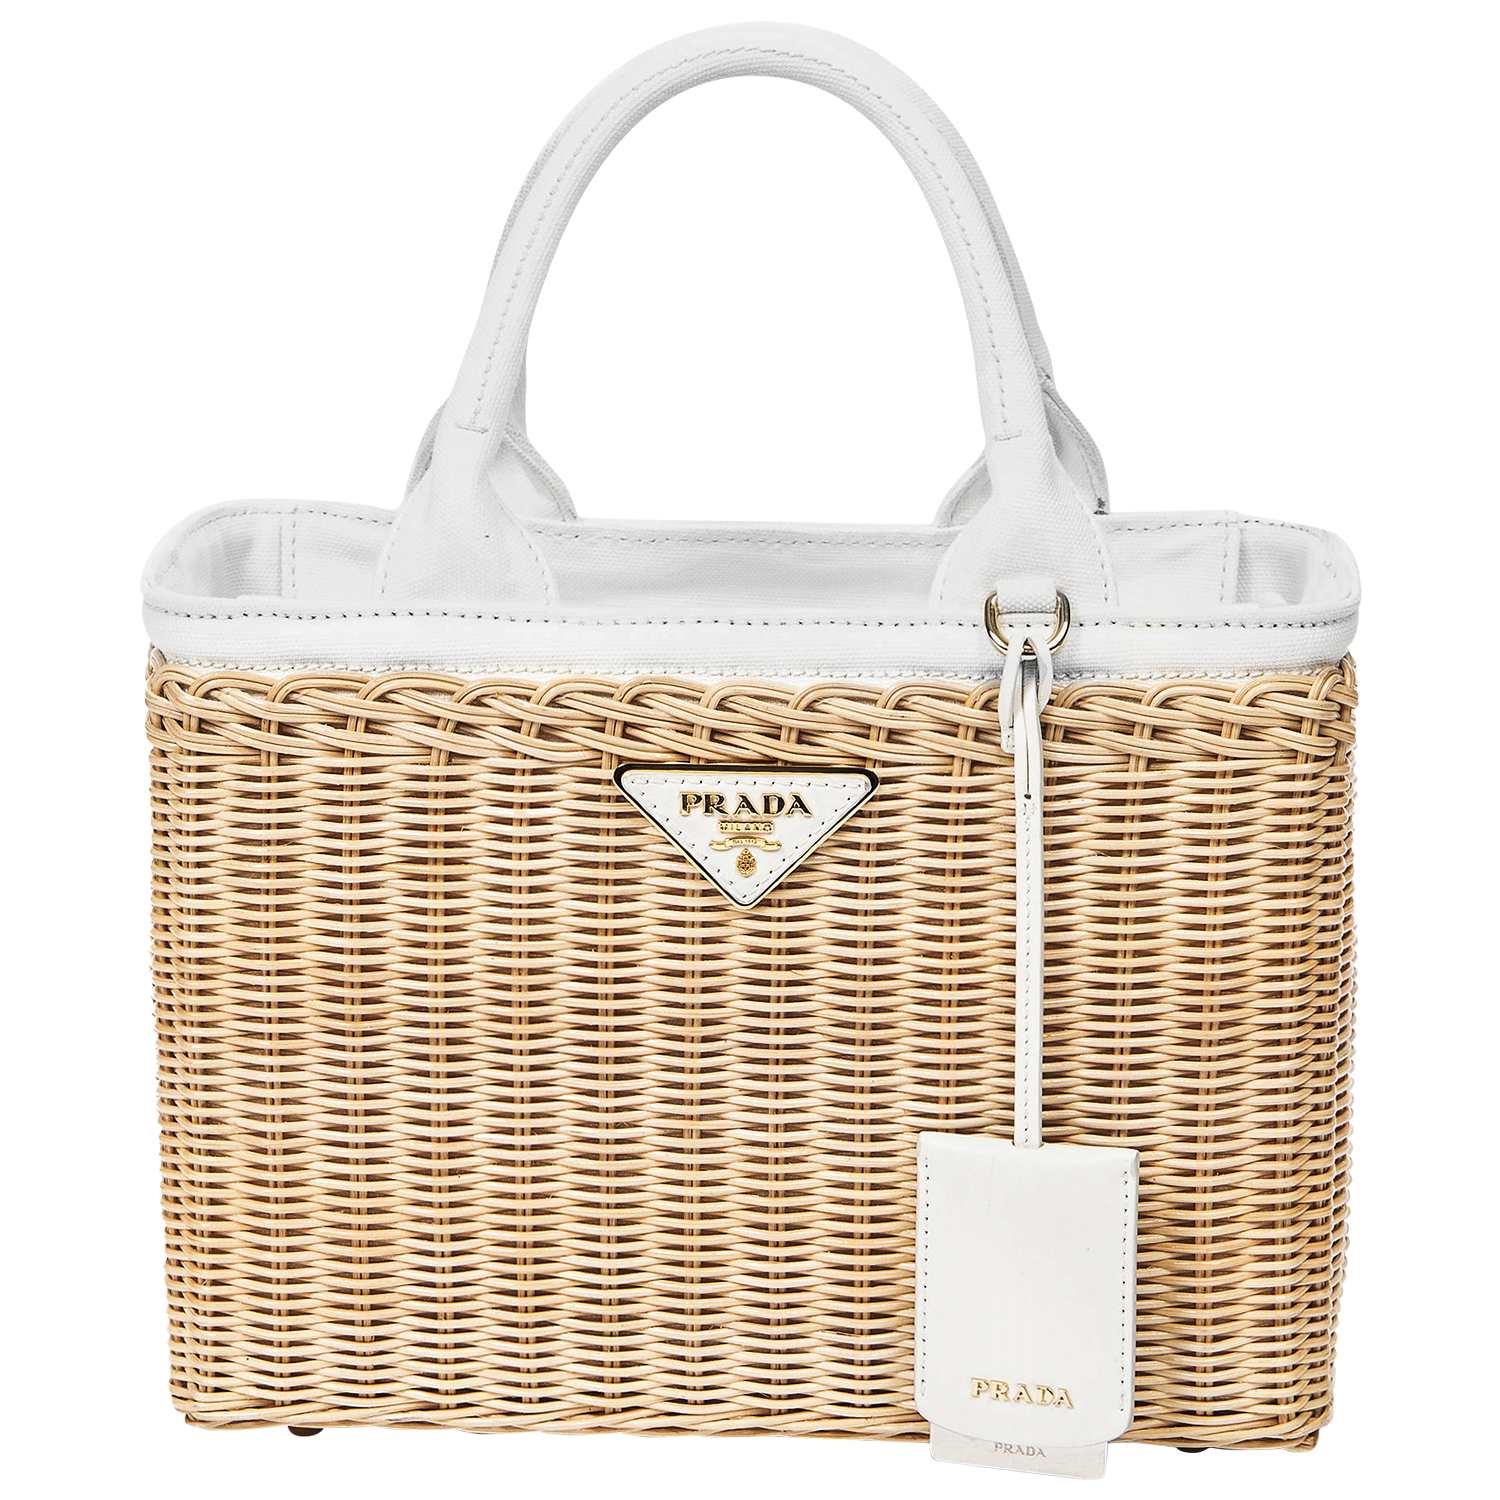 Prada Beige/White Basket Bag